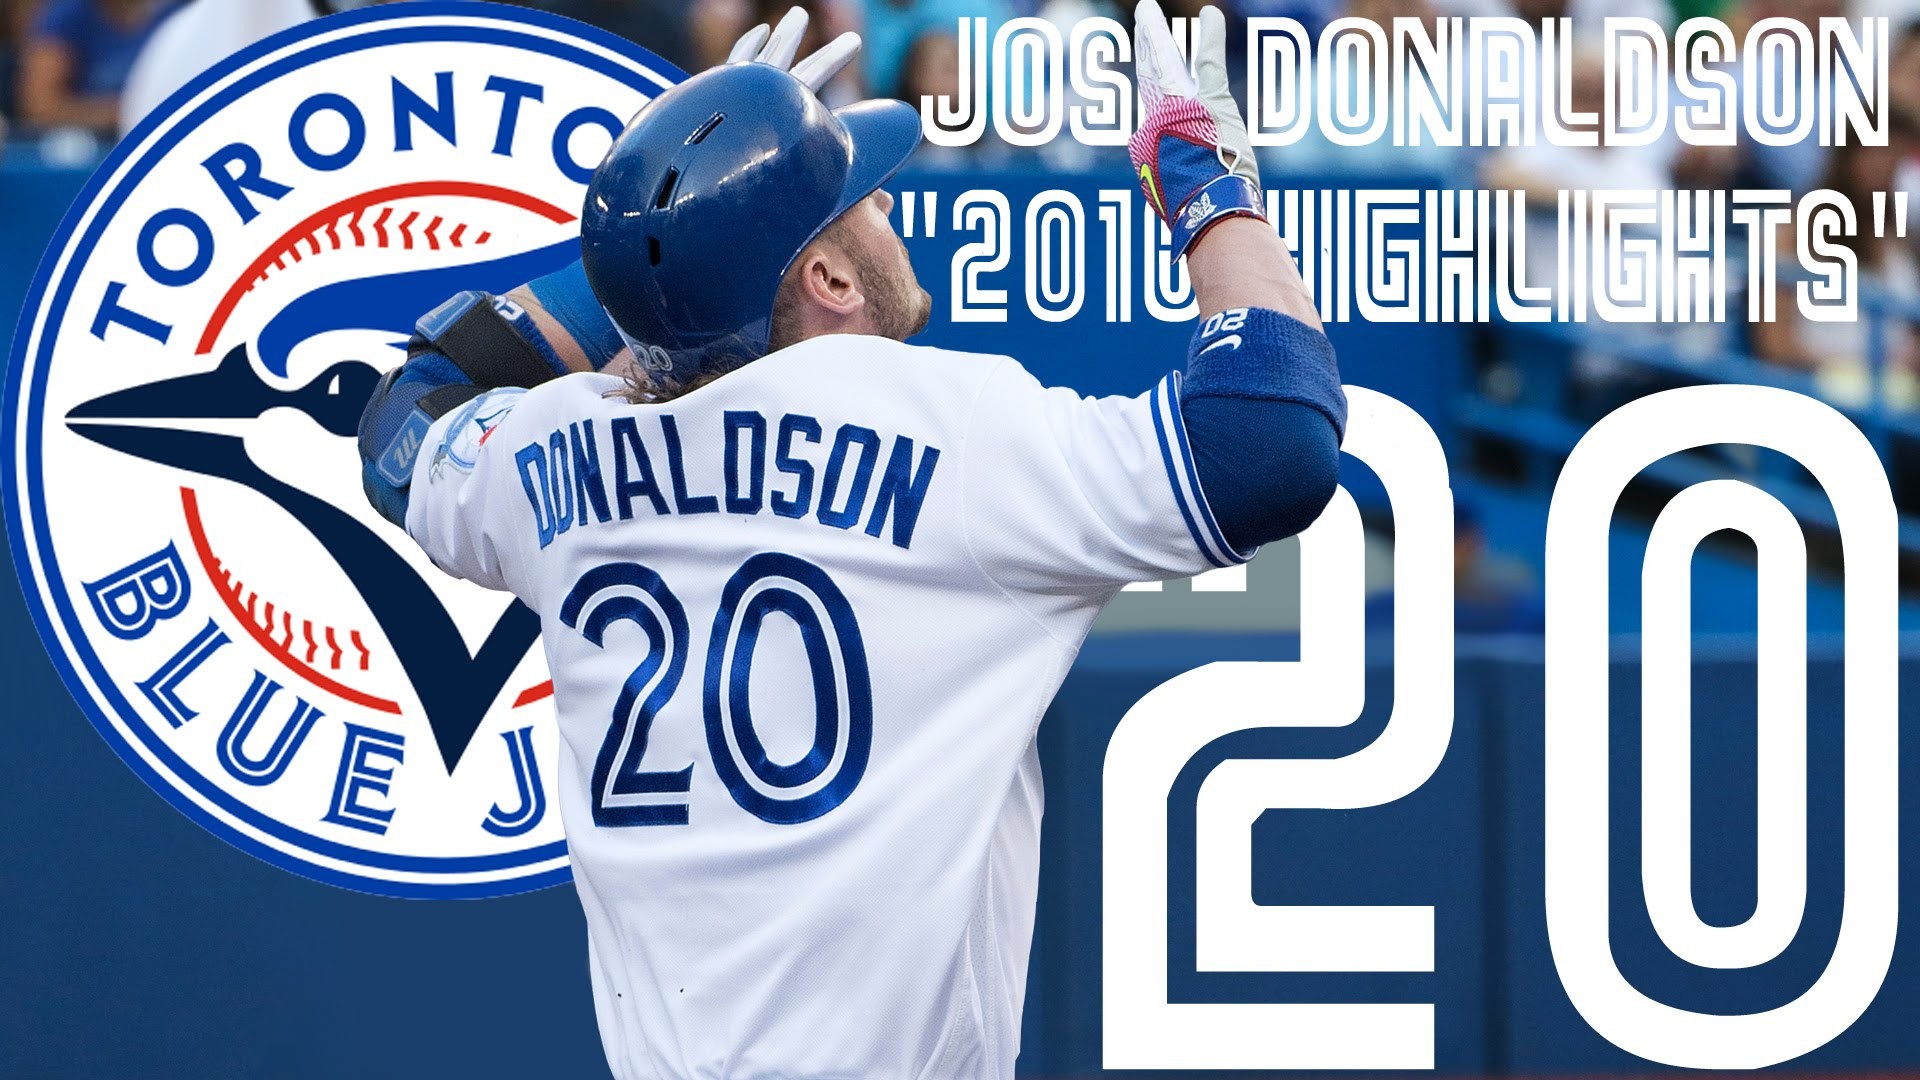 Josh Donaldson Toronto Blue Jays 2016 Highlights Mix